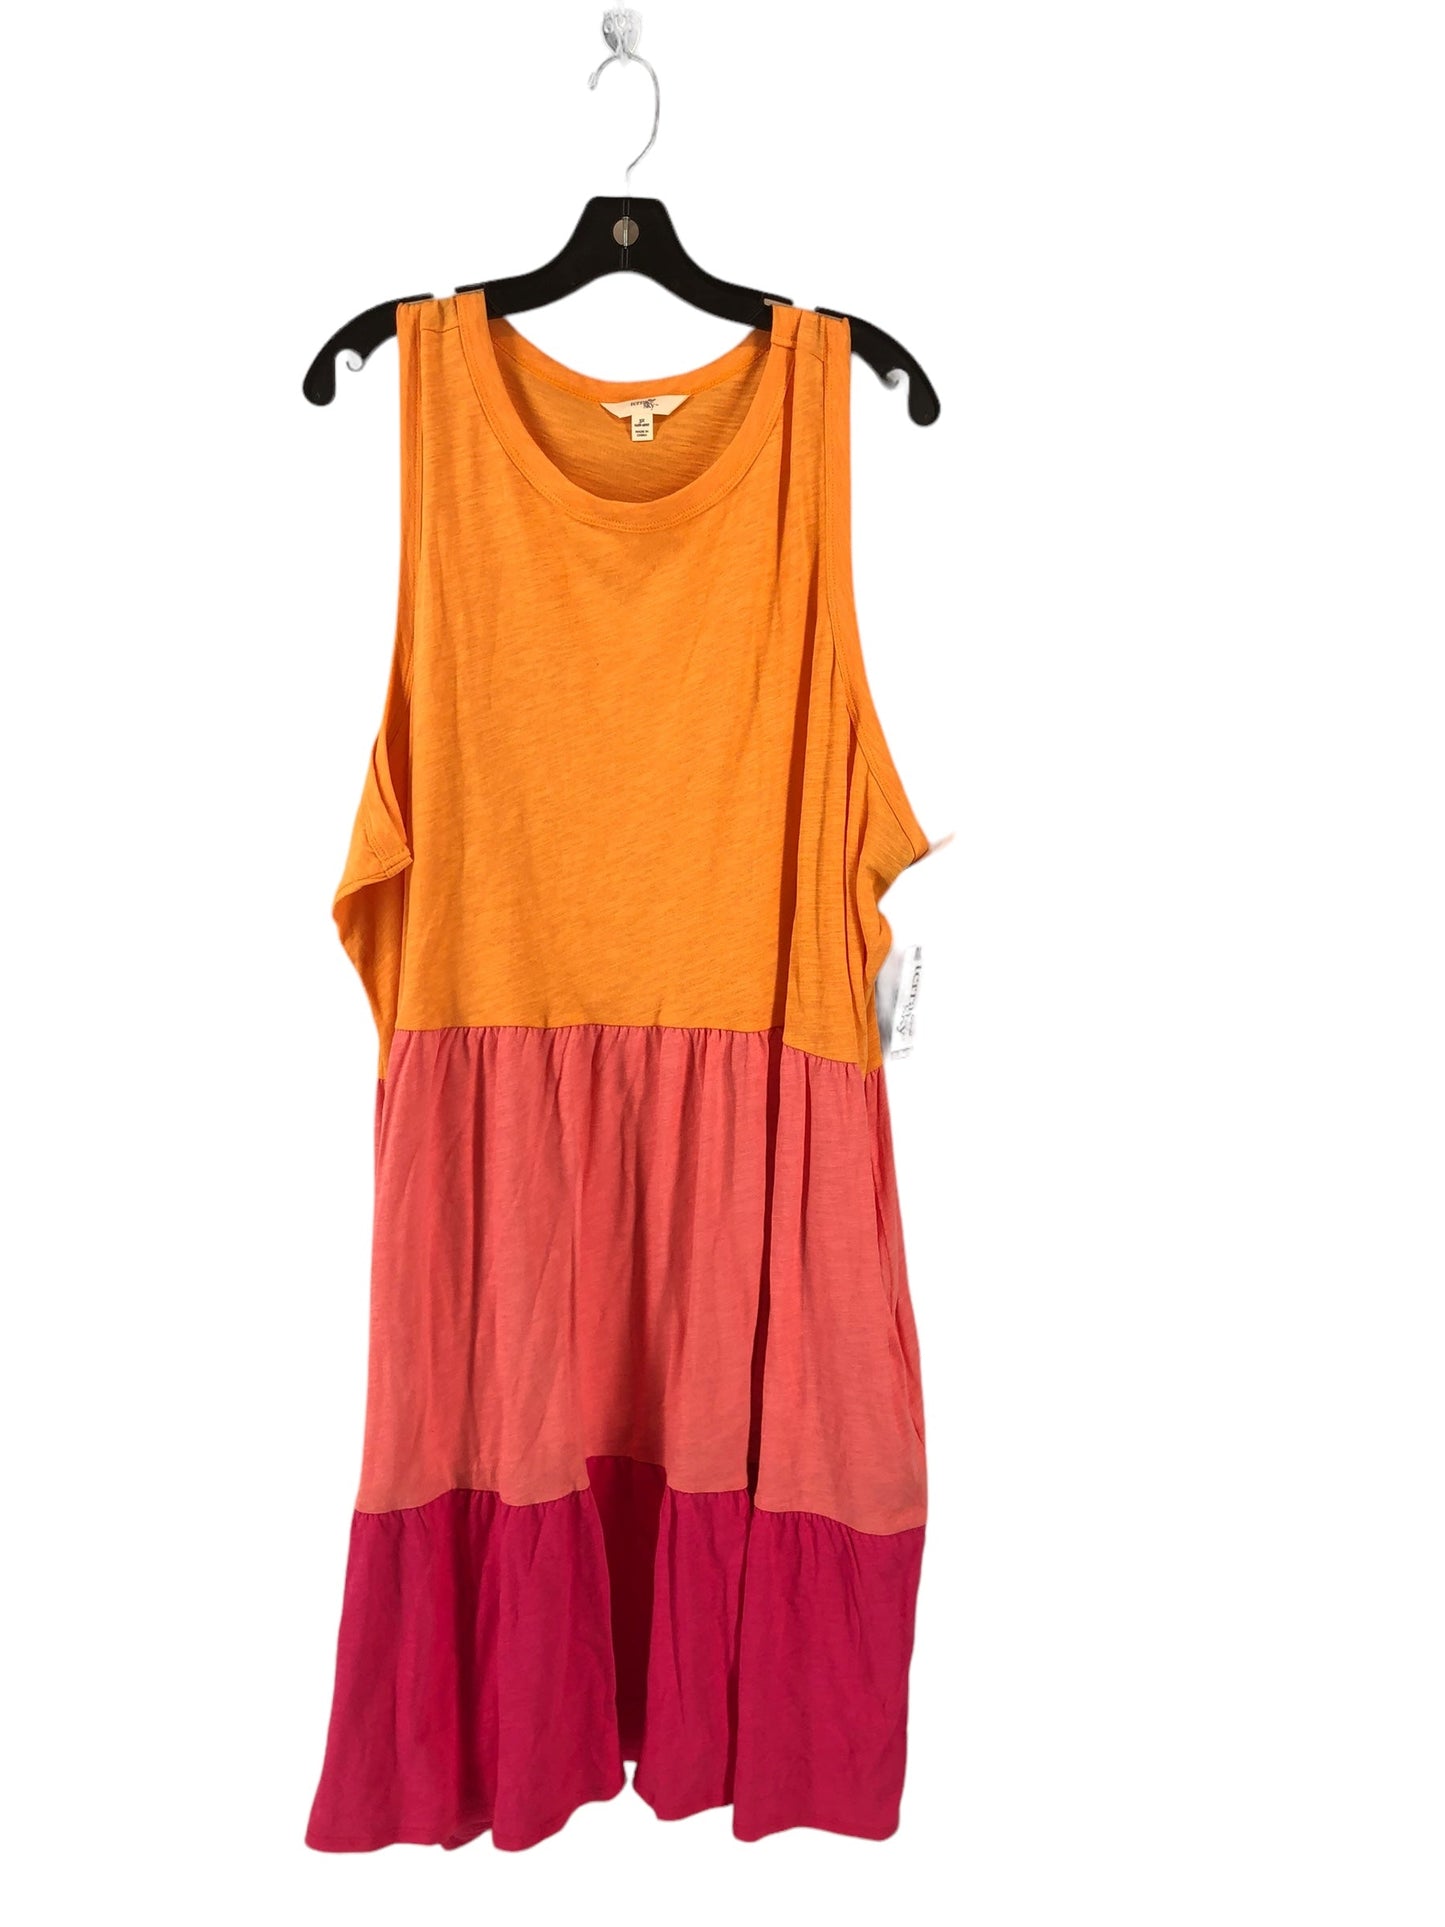 Orange & Pink Dress Casual Short Terra & Sky, Size 3x